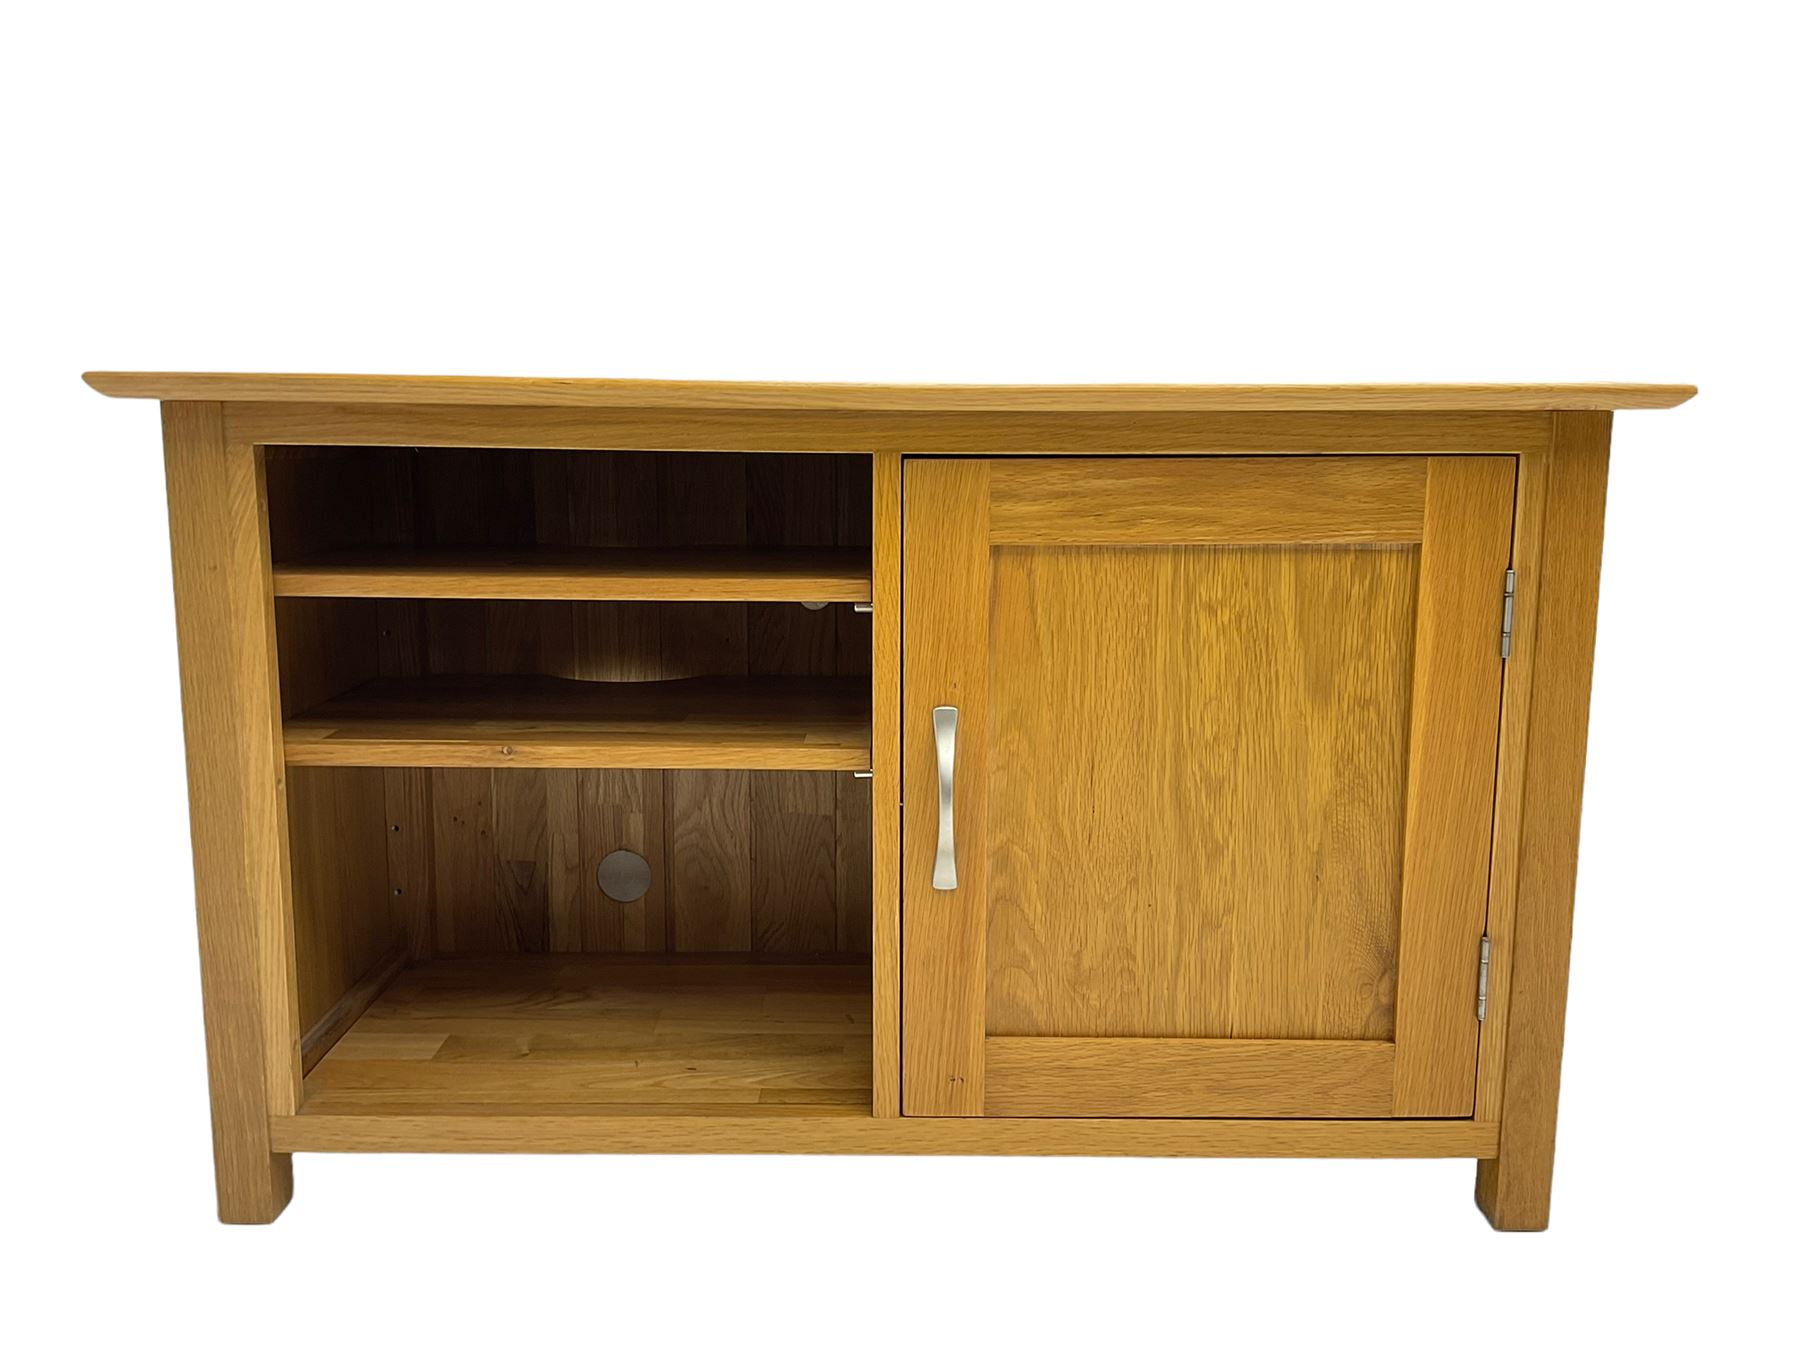 Light oak television cabinet